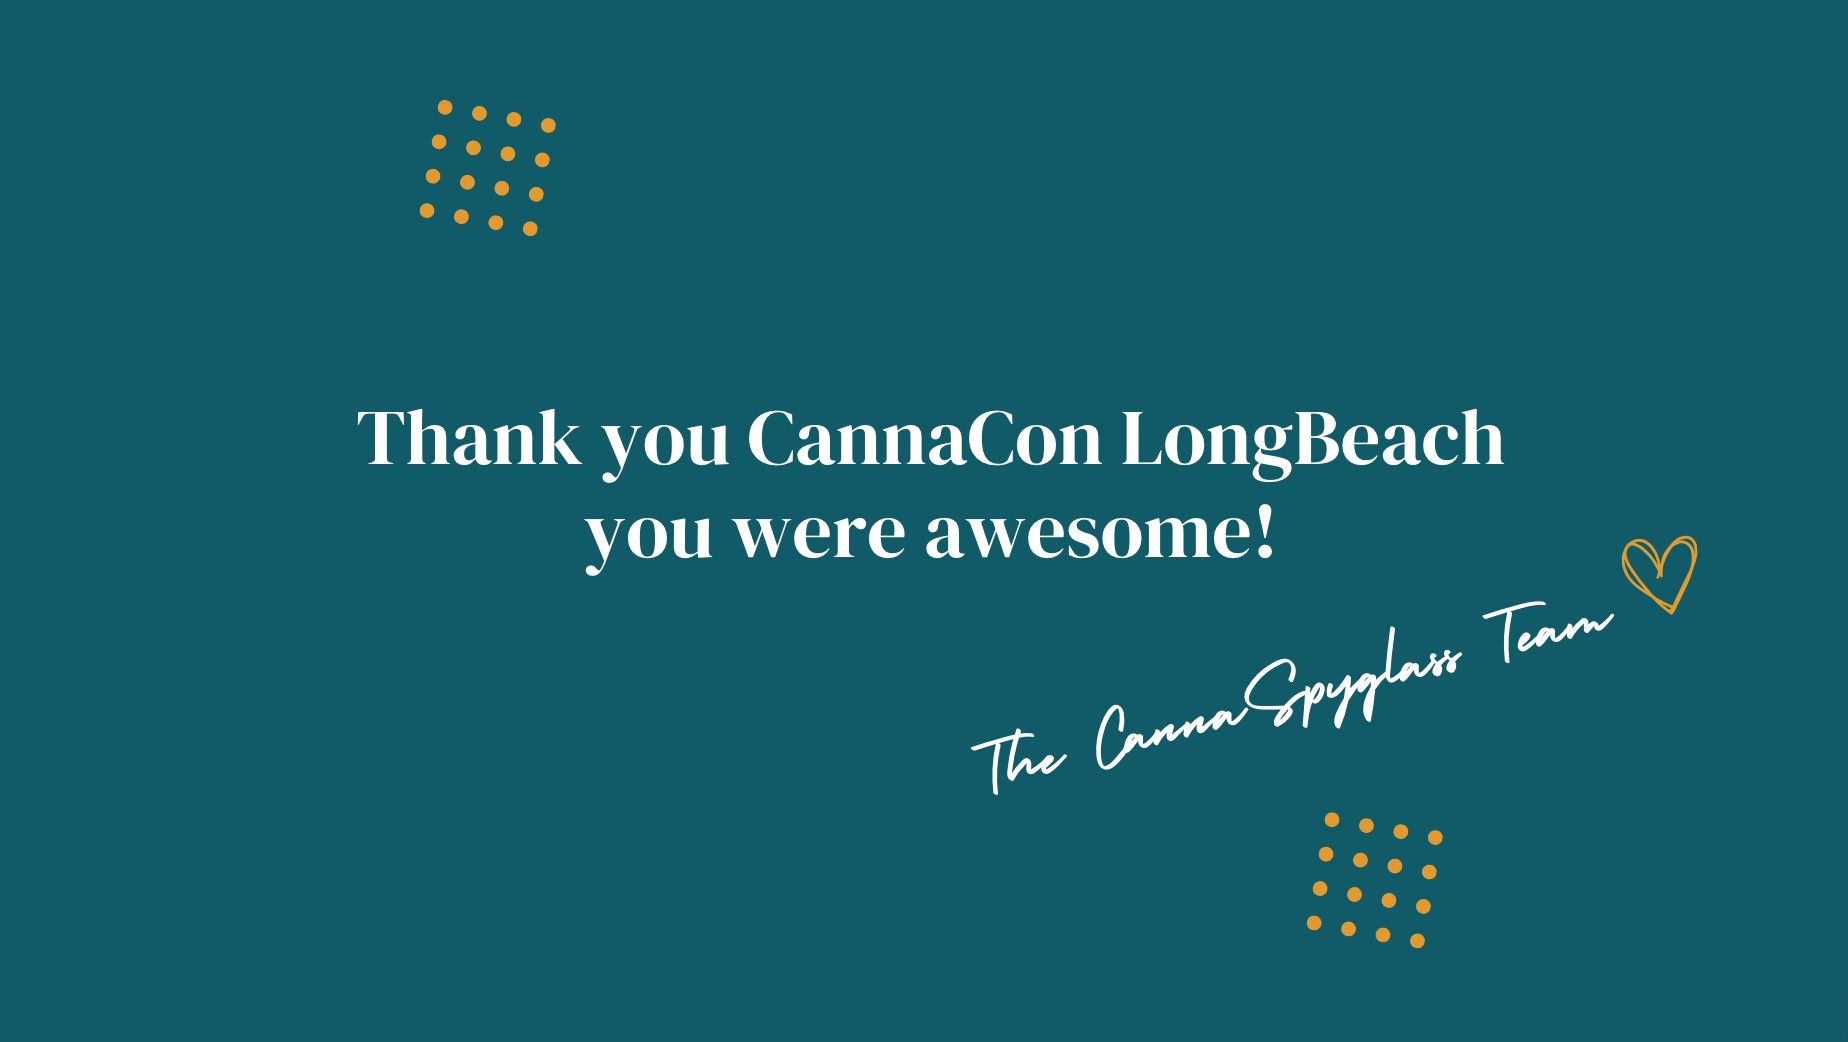 A virtual thank you card from CannaSpyglass to CannaCon LongBeach. CannaSpyglass is a leading cannabis data analytics platform for the cannabis industry.